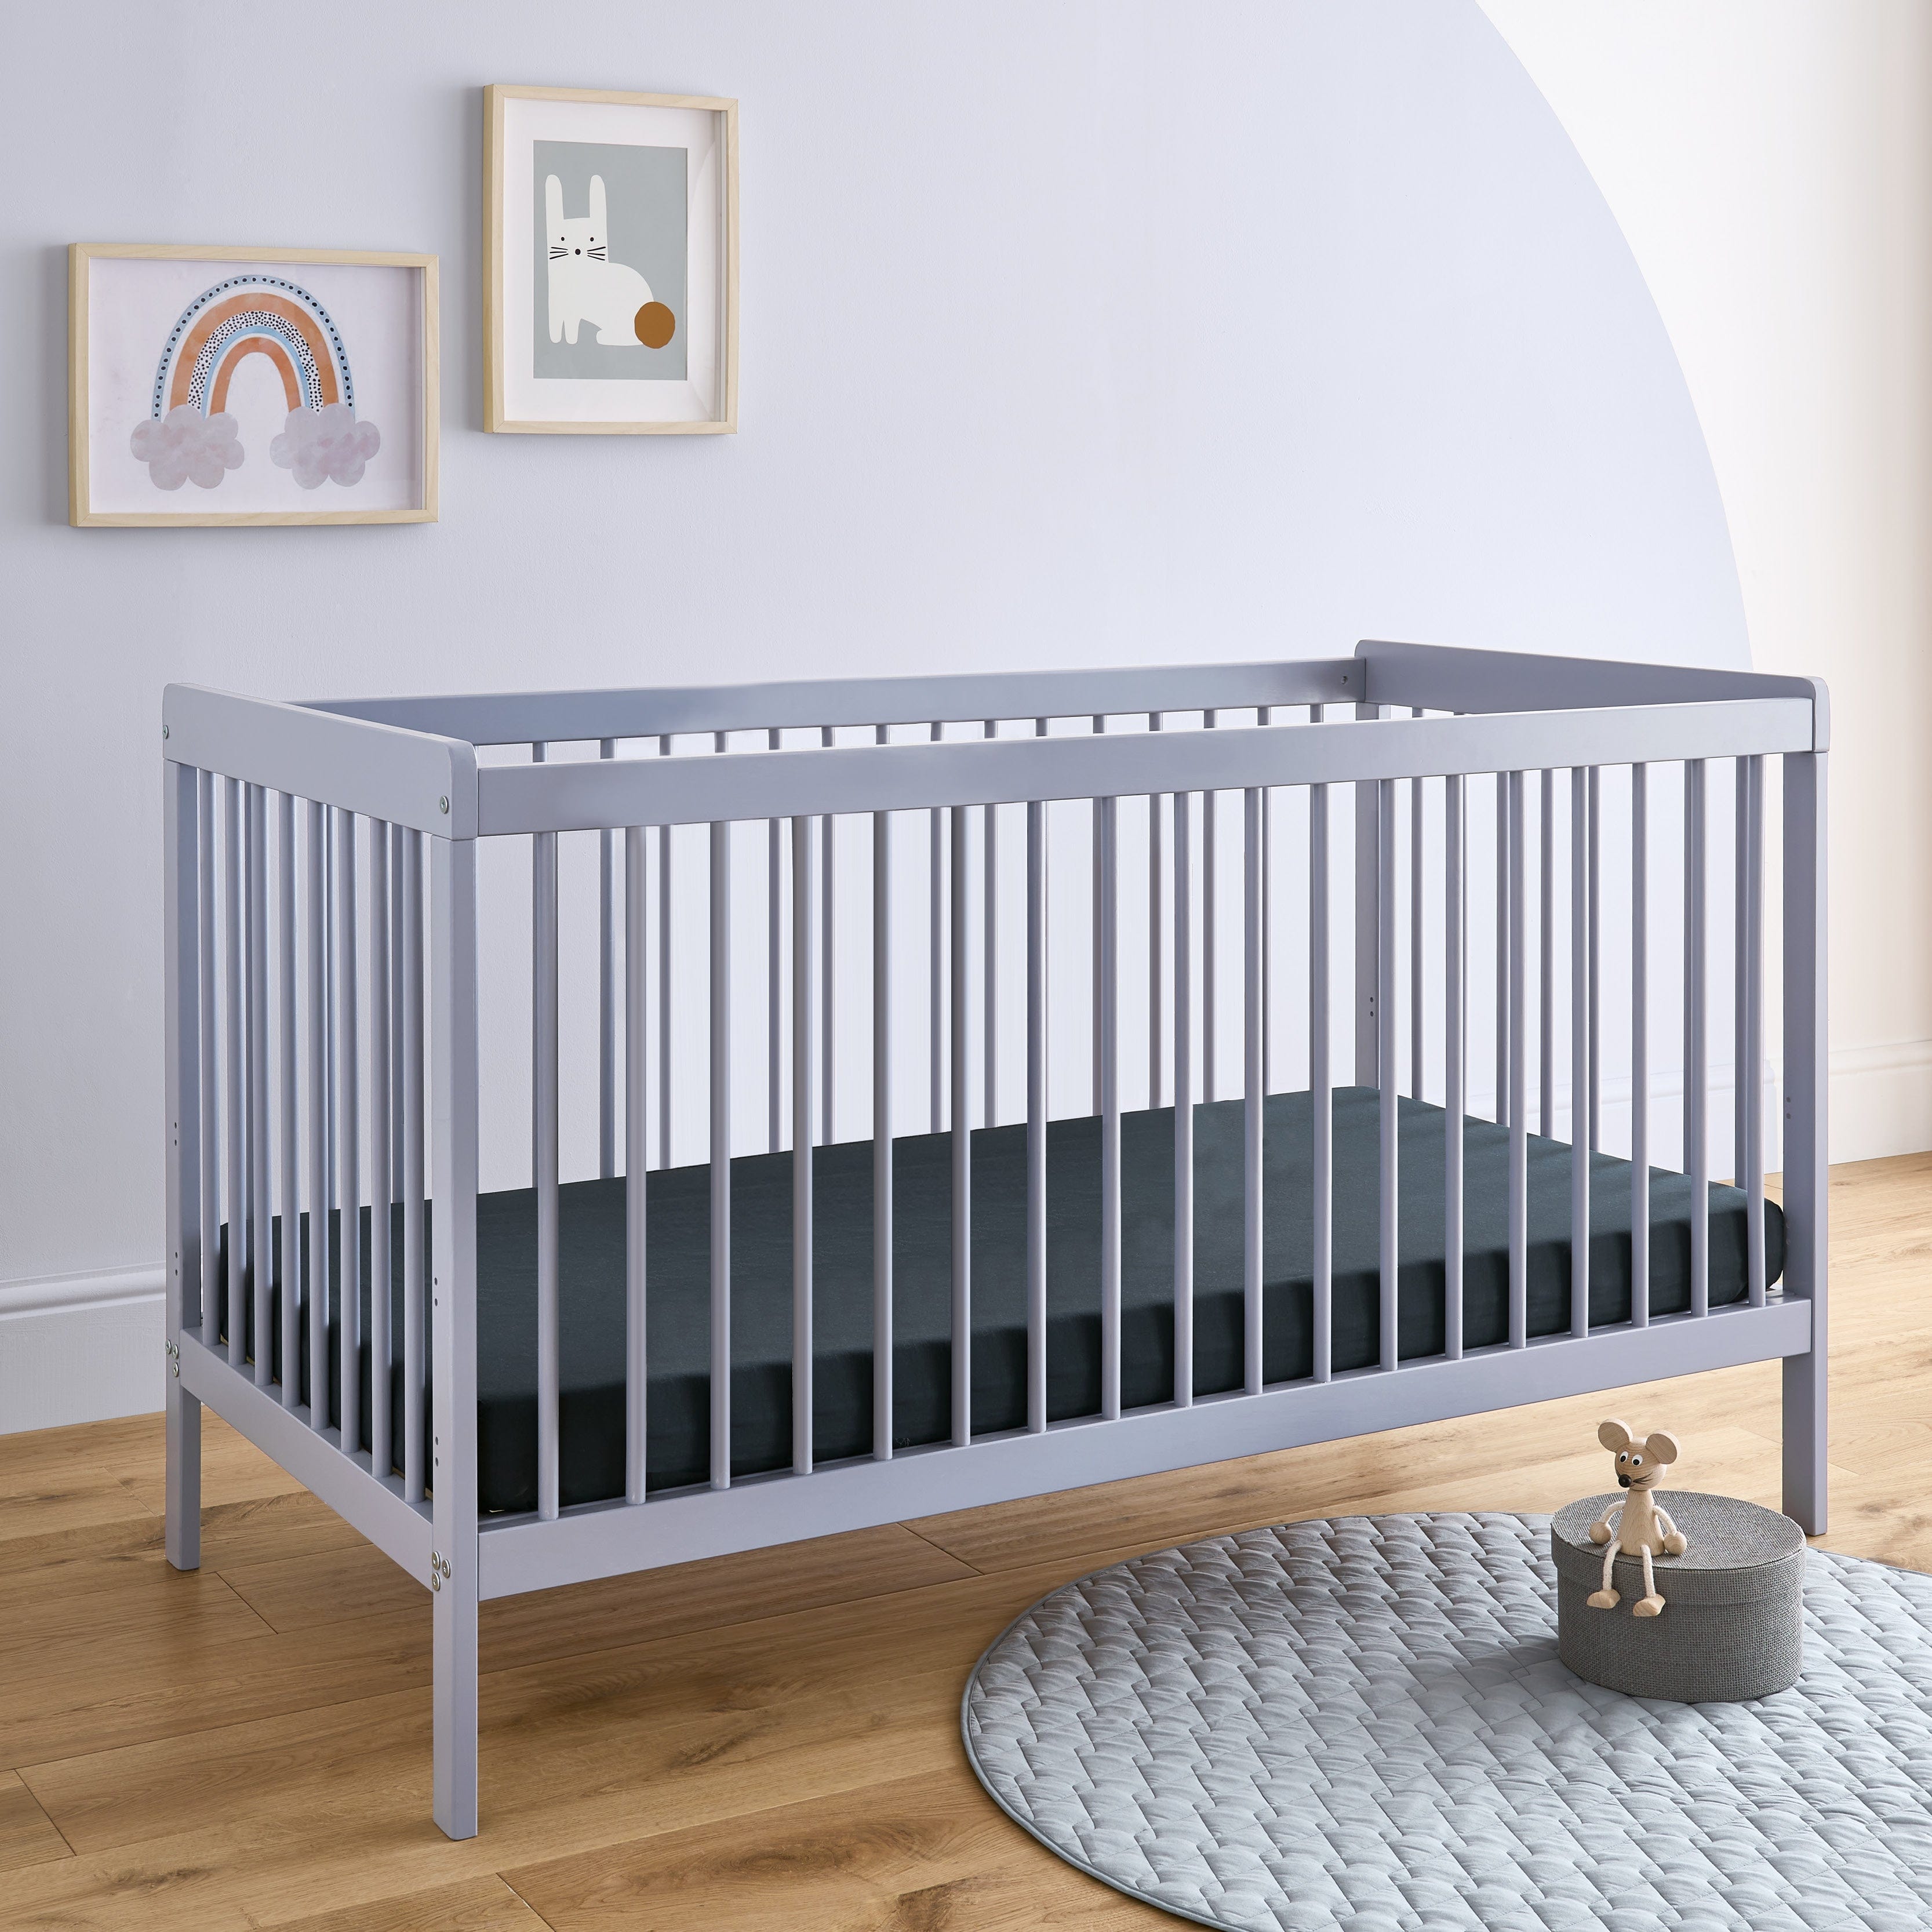 CuddleCo Nursery Room Sets CuddleCo Nola Cot Bed - Flint Blue